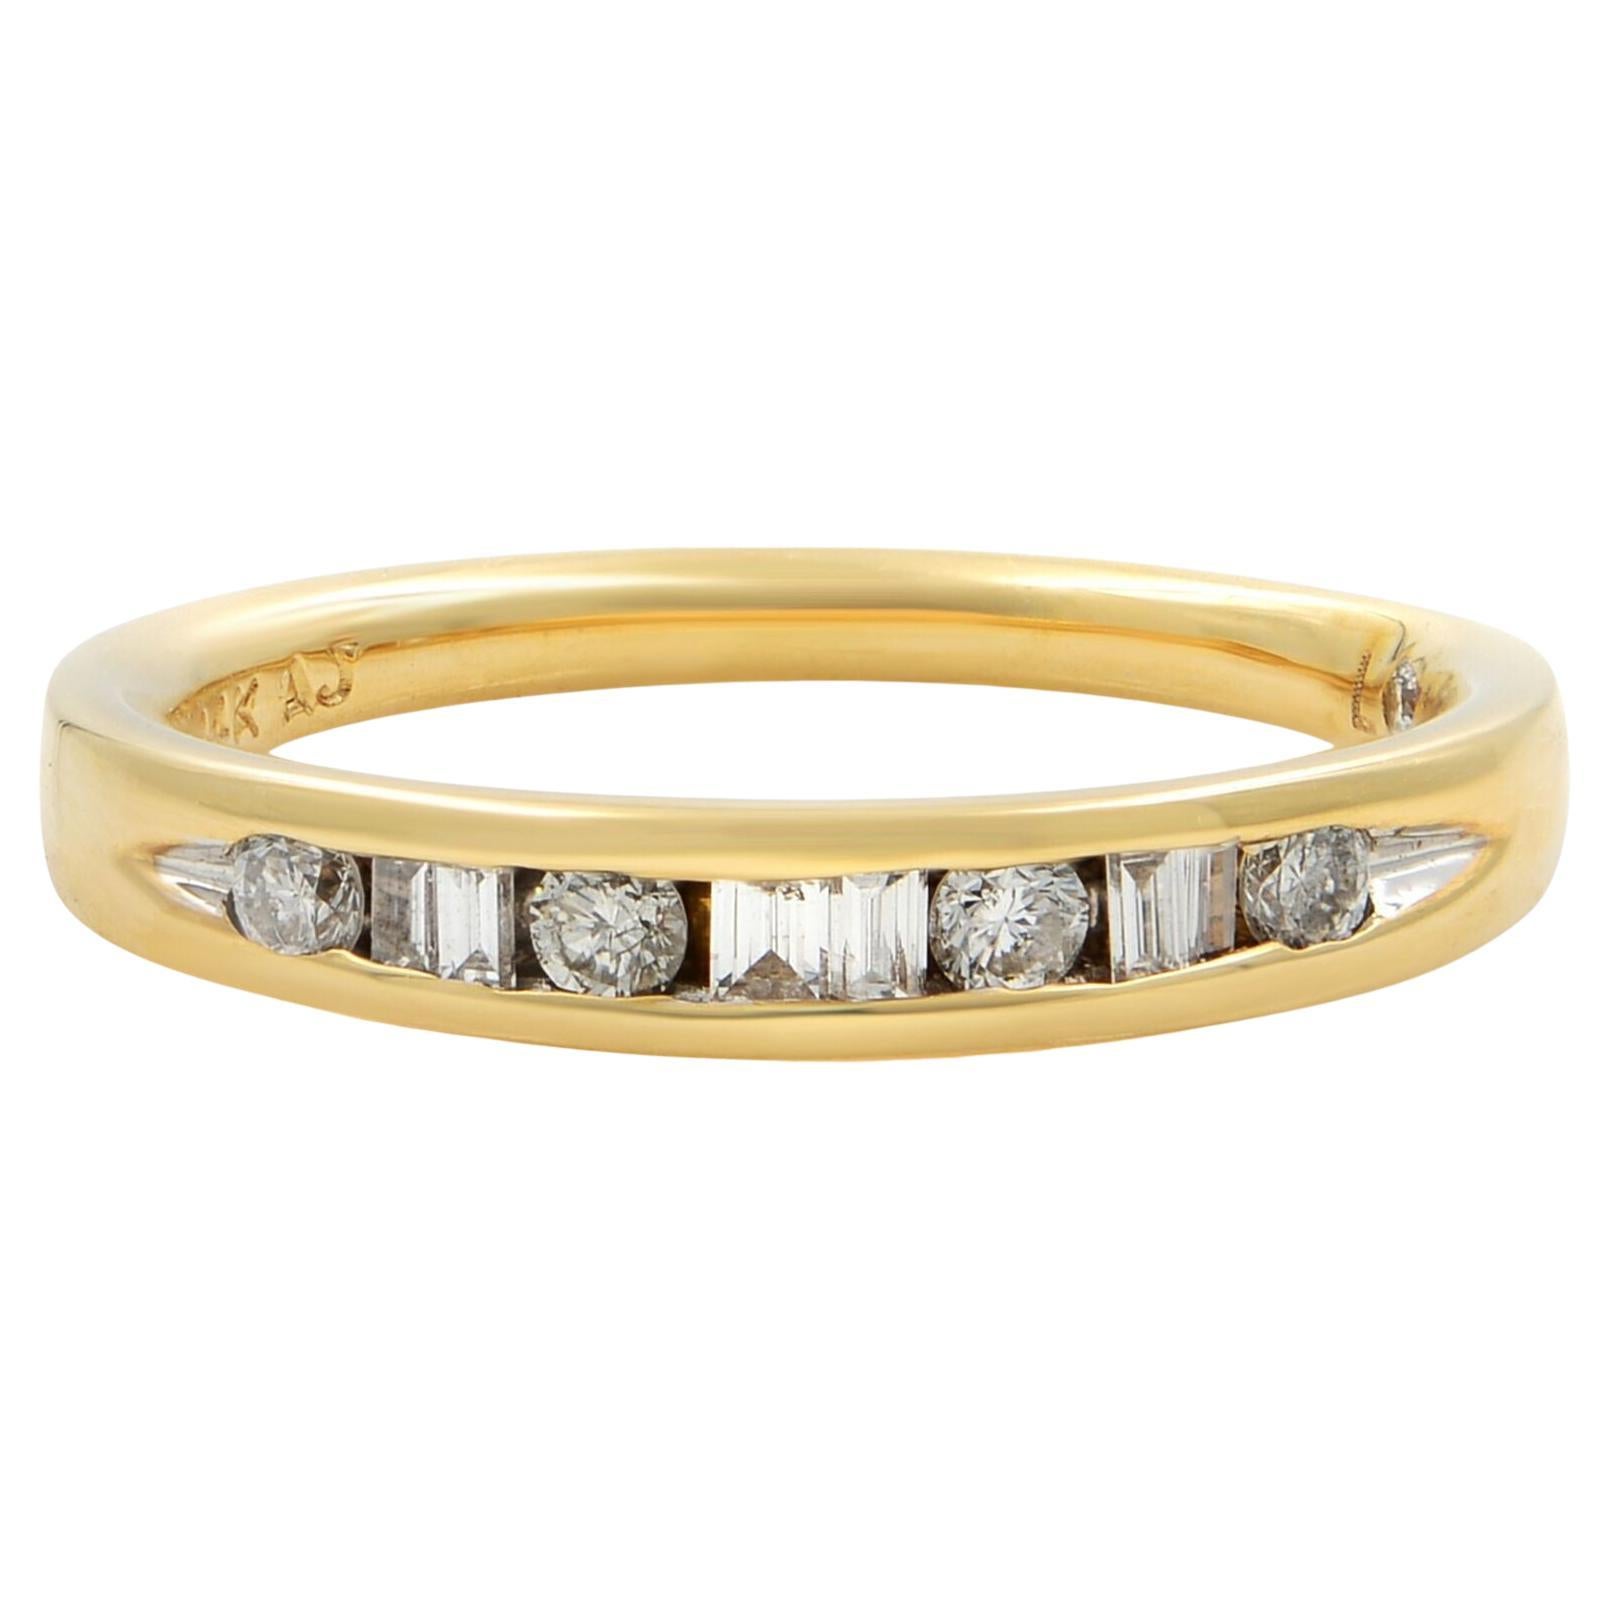 Rachel Koen Diamond Ladies Wedding Band 14K Yellow Gold 0.25 Cttw Size 7